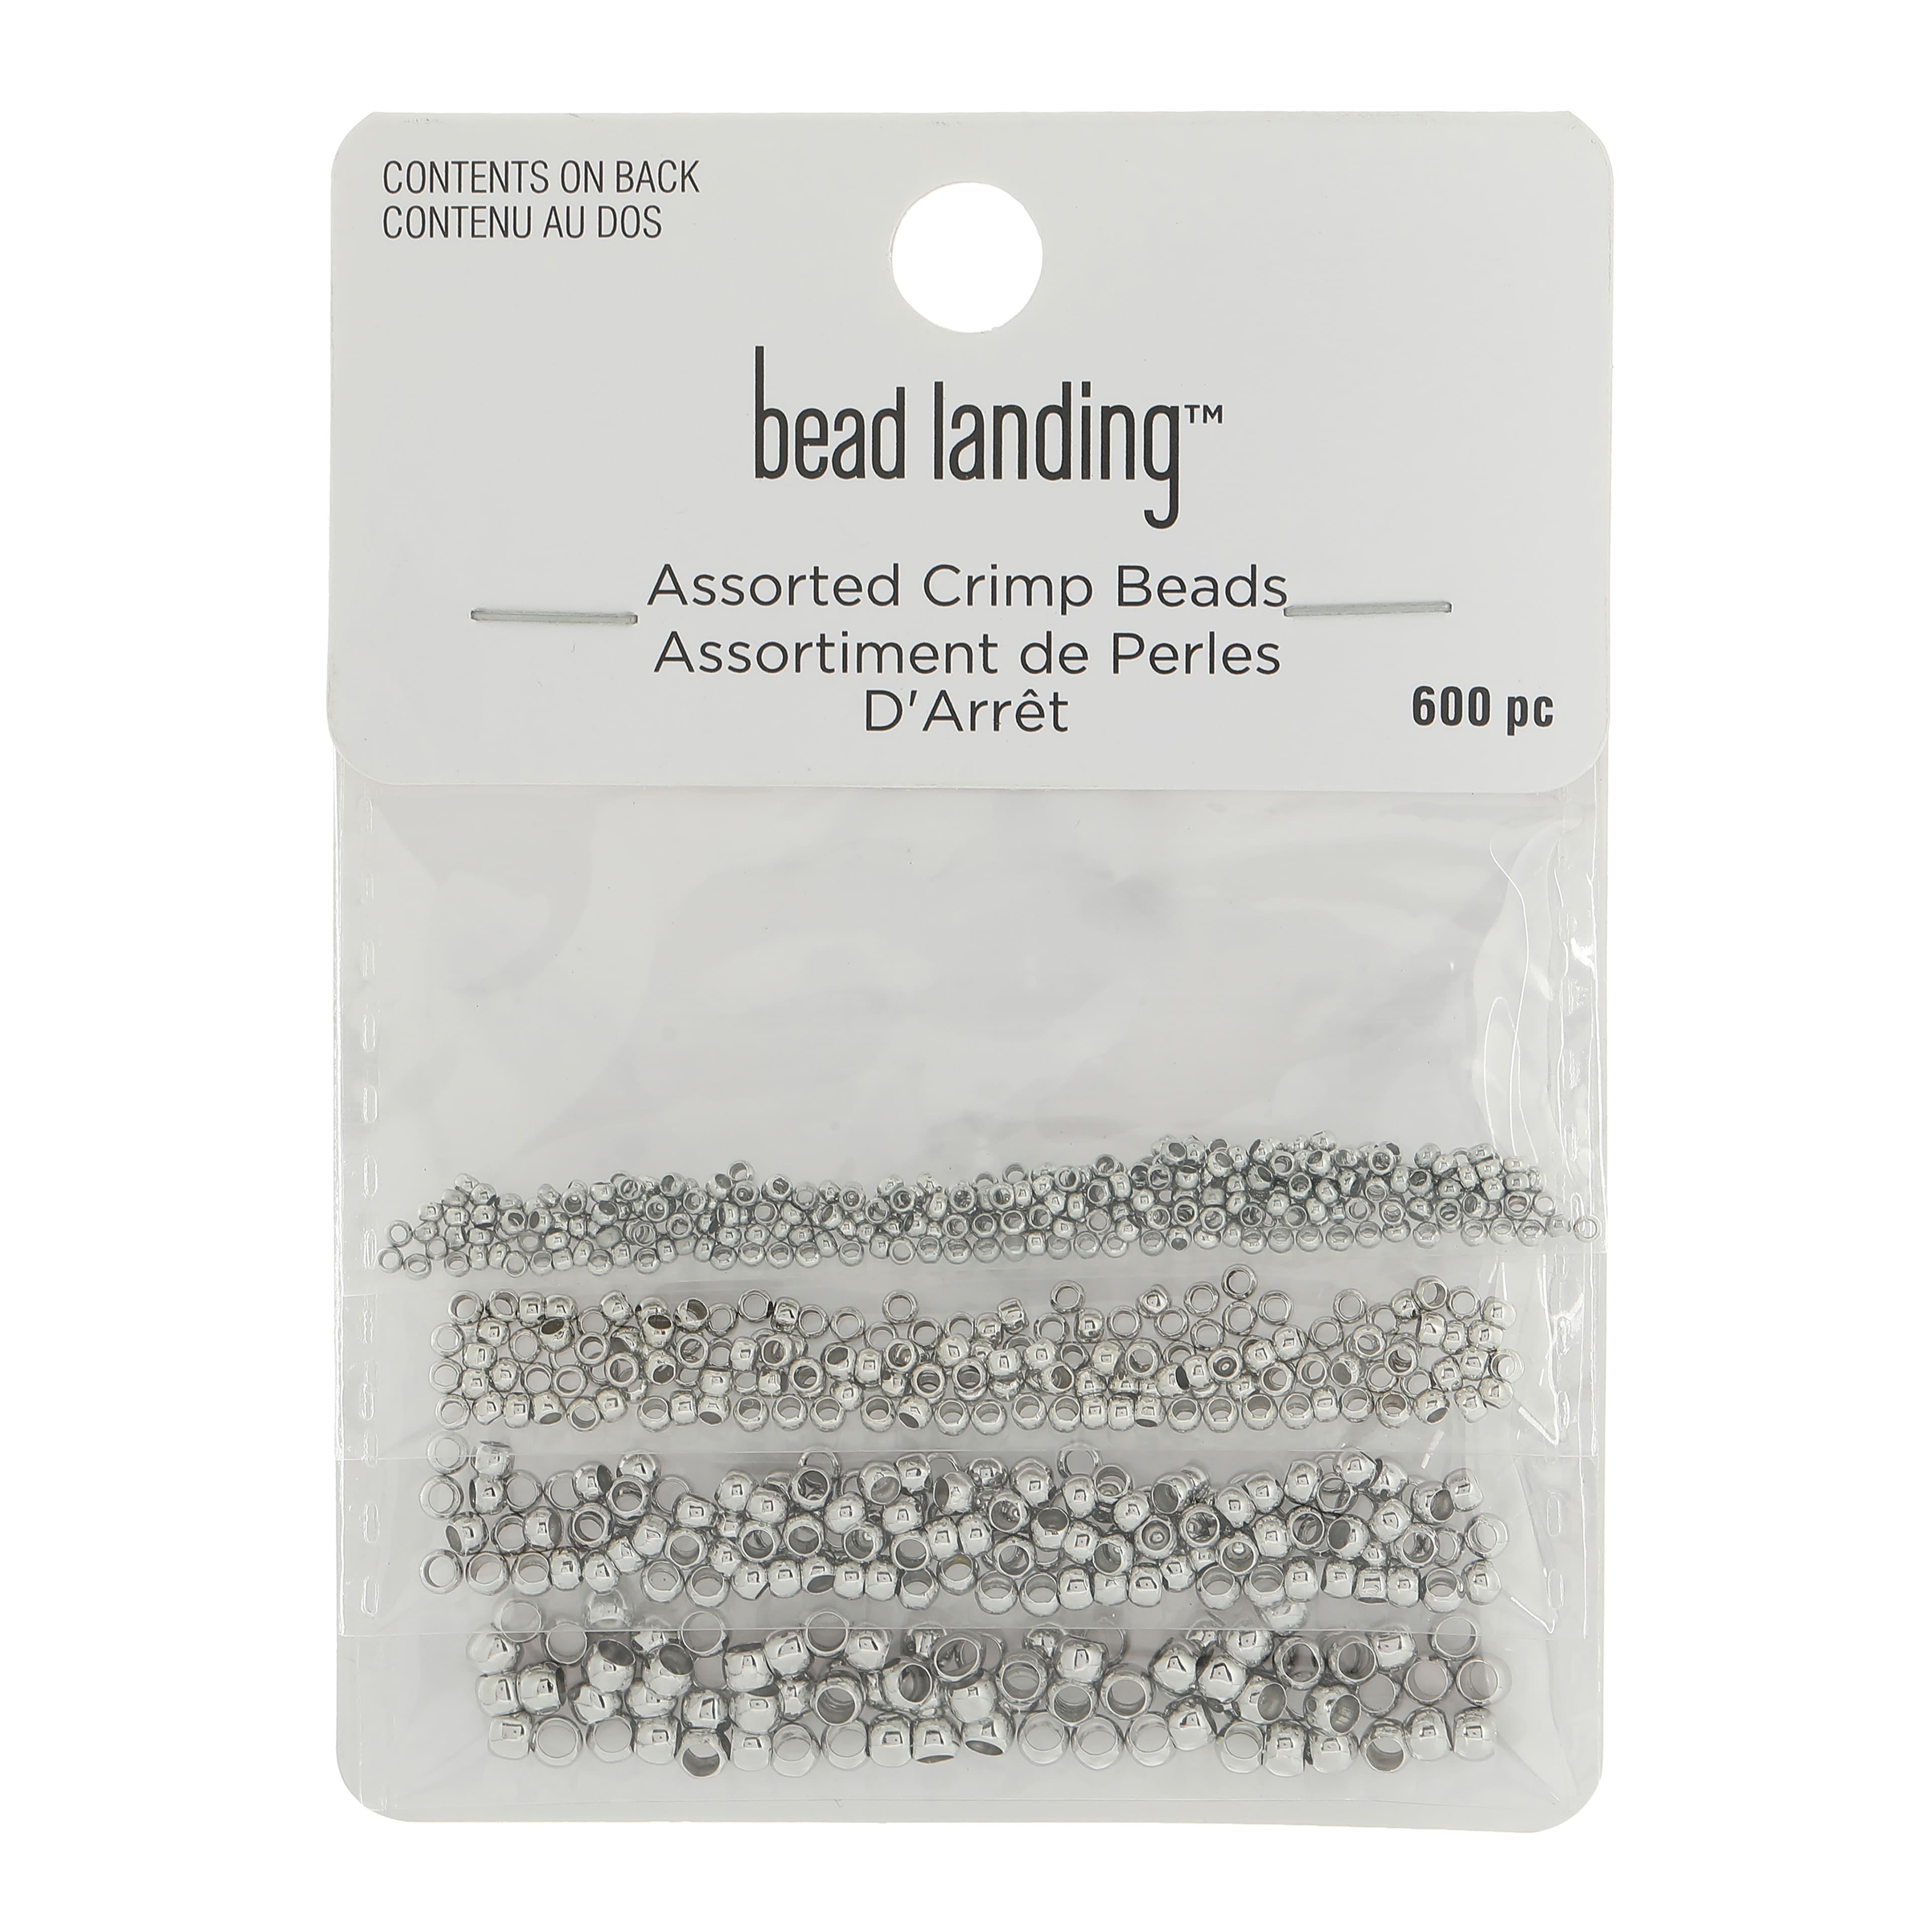 Assorted Metal Crimp Beads, 600ct. by Bead Landing™ 